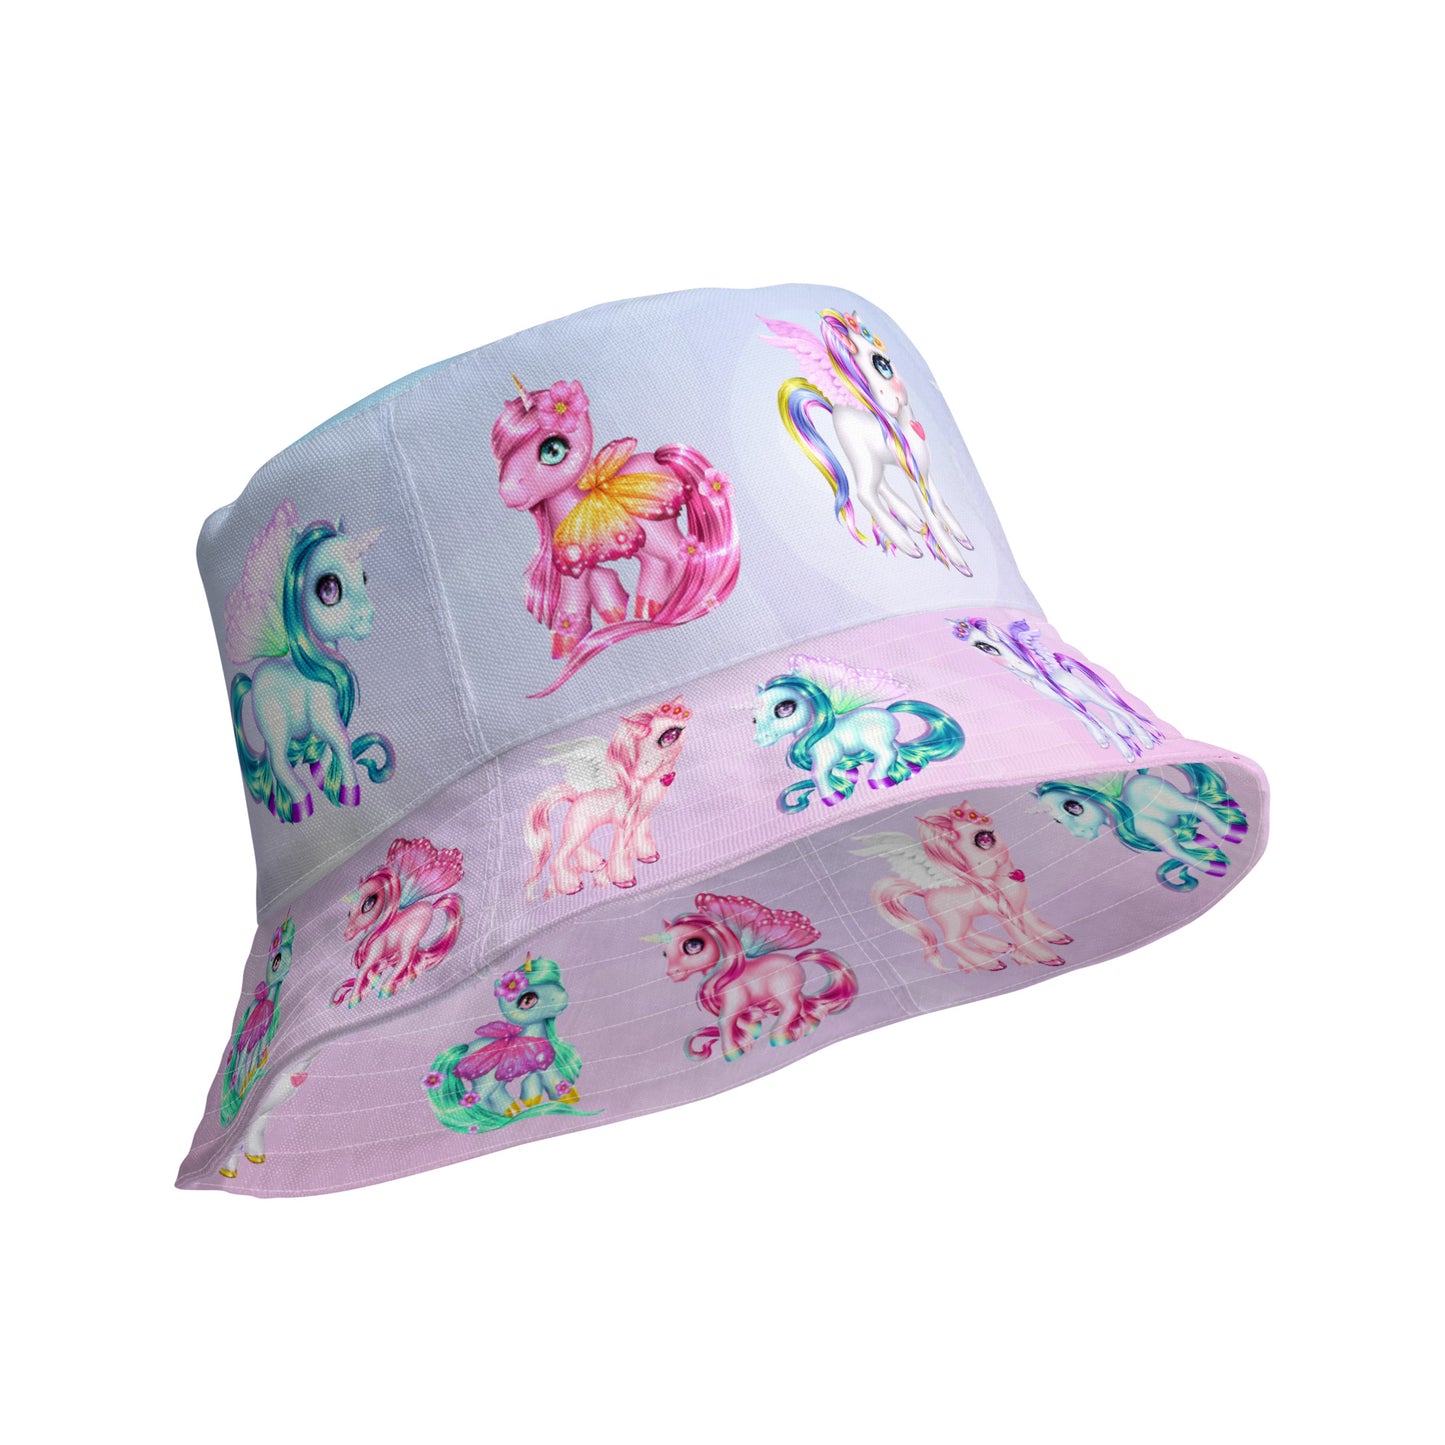 Unicorn Reversible bucket hat